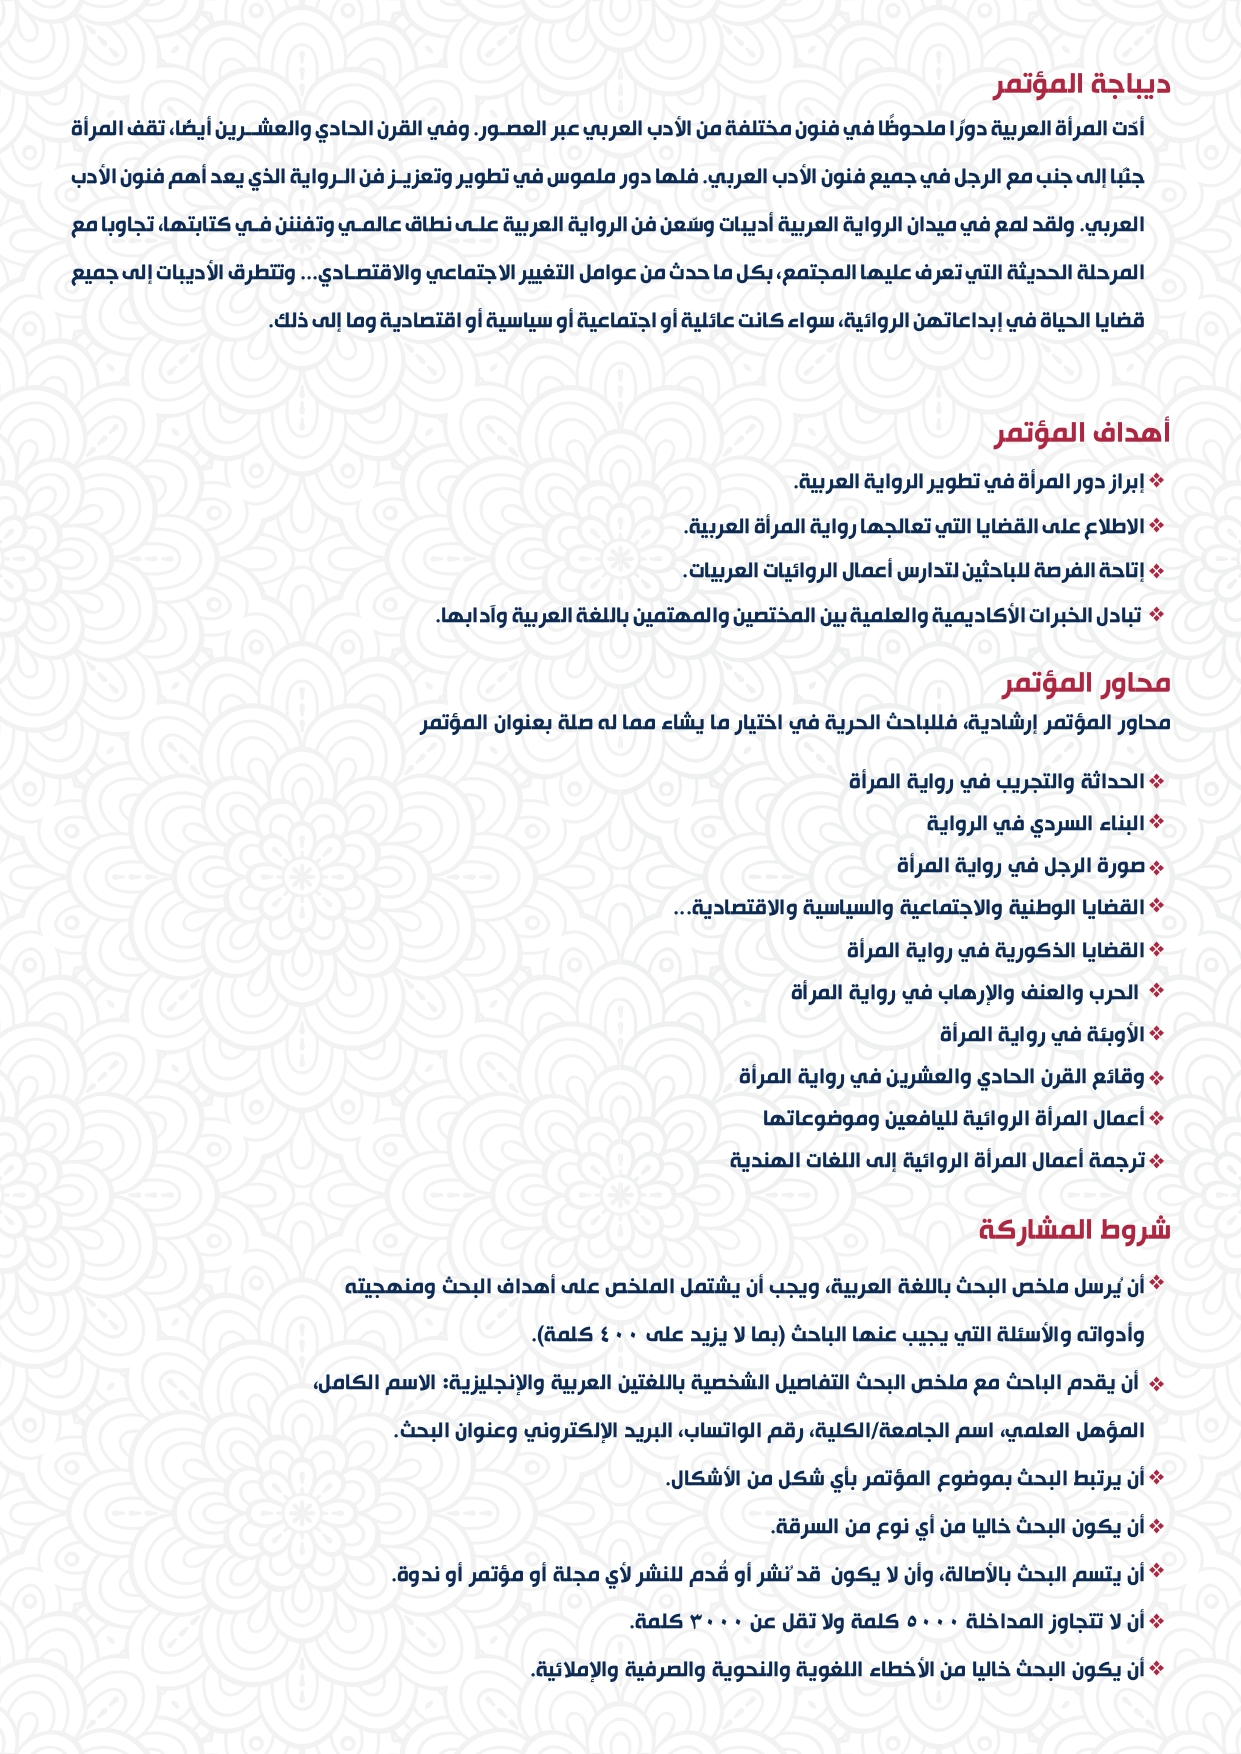 CAAS organises International Conference on Arabic Novels Written by Women in the 21st Century 